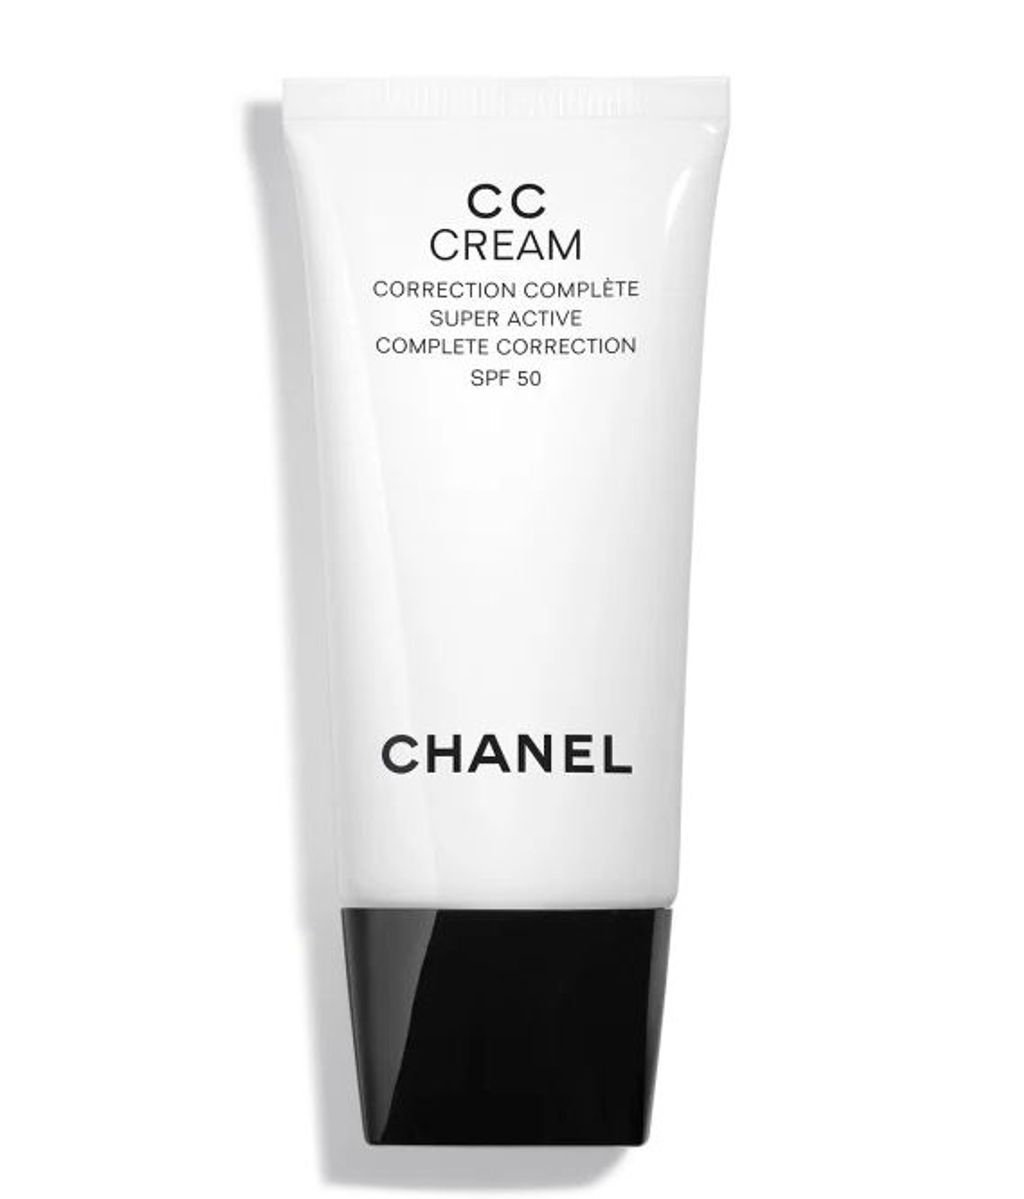 CC Cream de Chanel